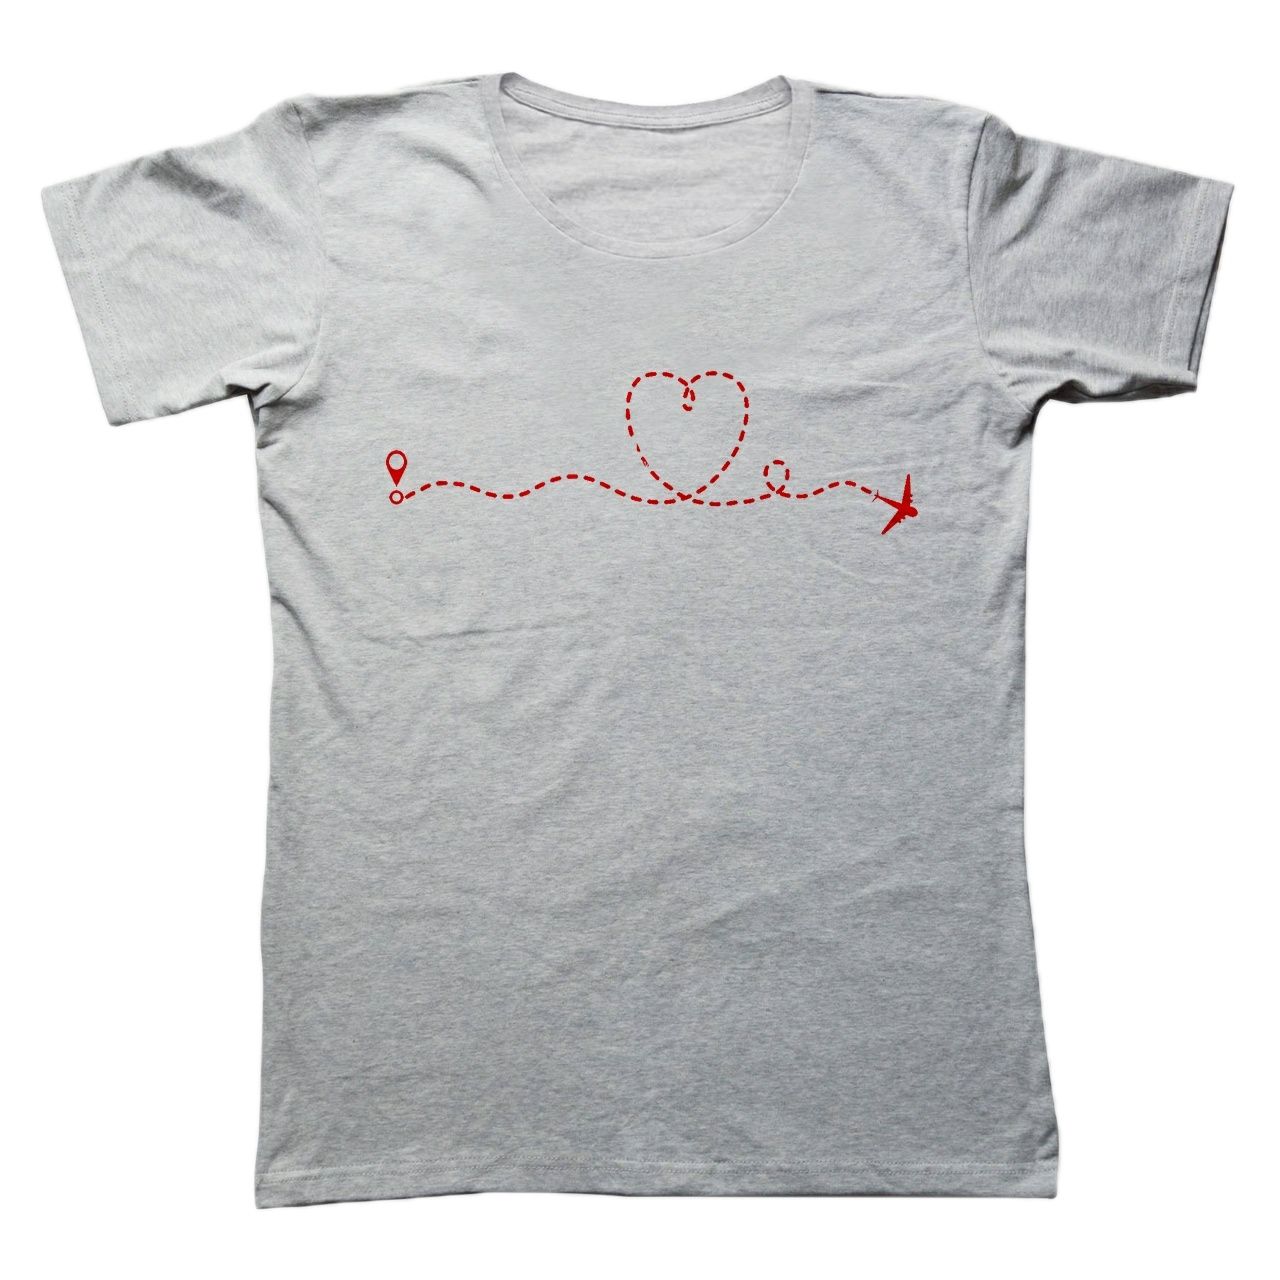 تی شرت زنانه به رسم طرح مسیر قلب کد 474 -  - 1